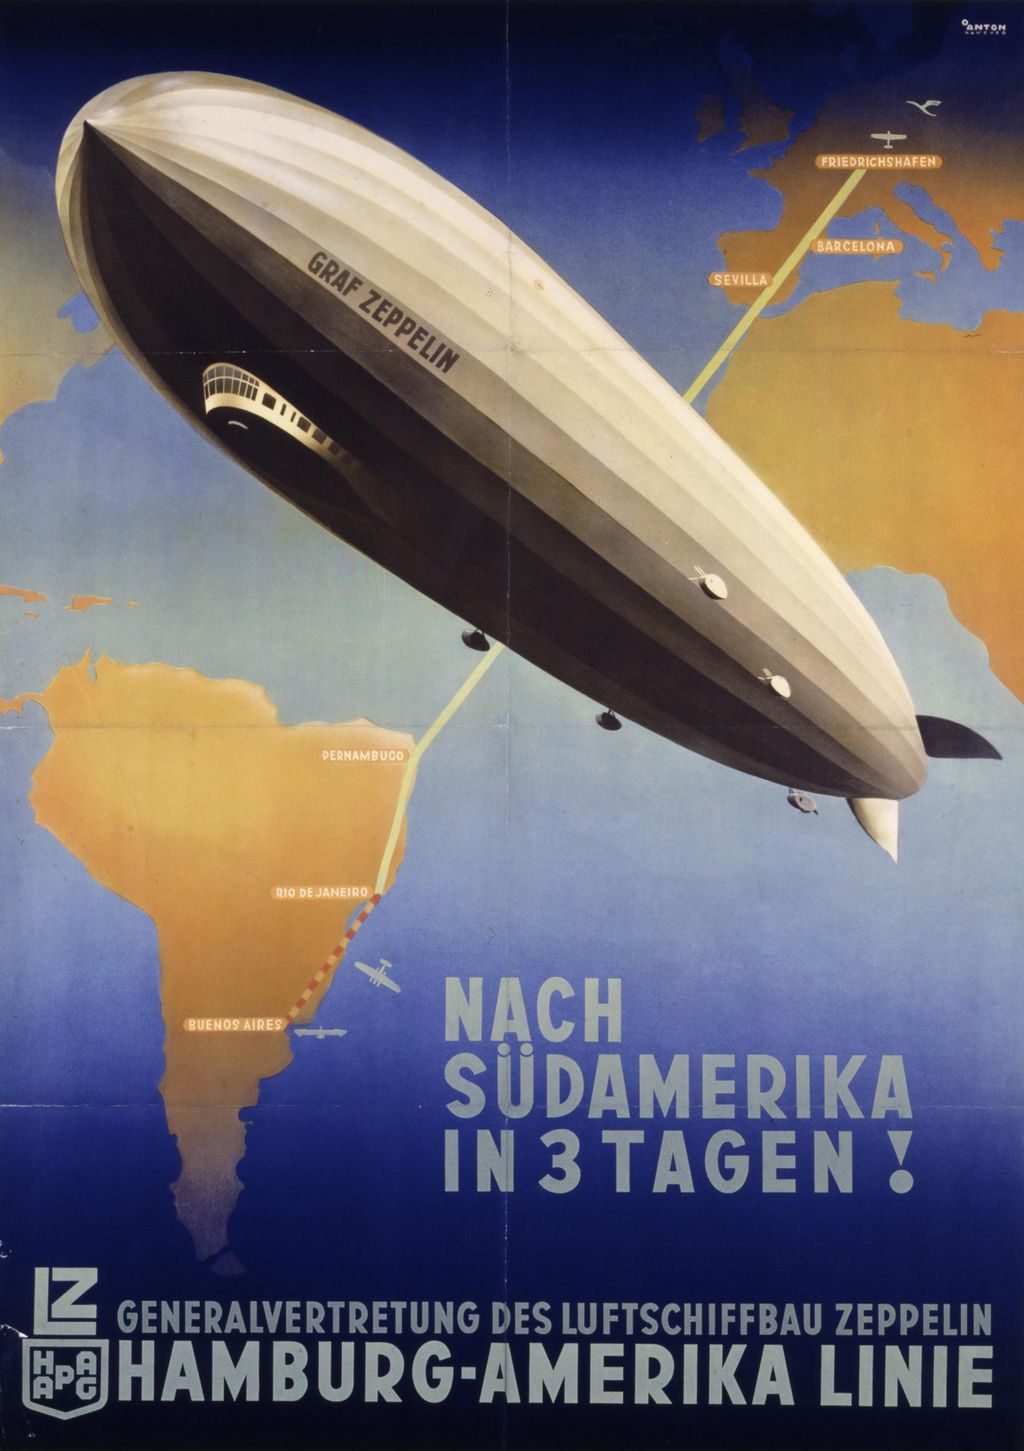 Exponat: Plakat: Anton, Ottmar "Nach Südamerika in 3 Tagen!", um 1932